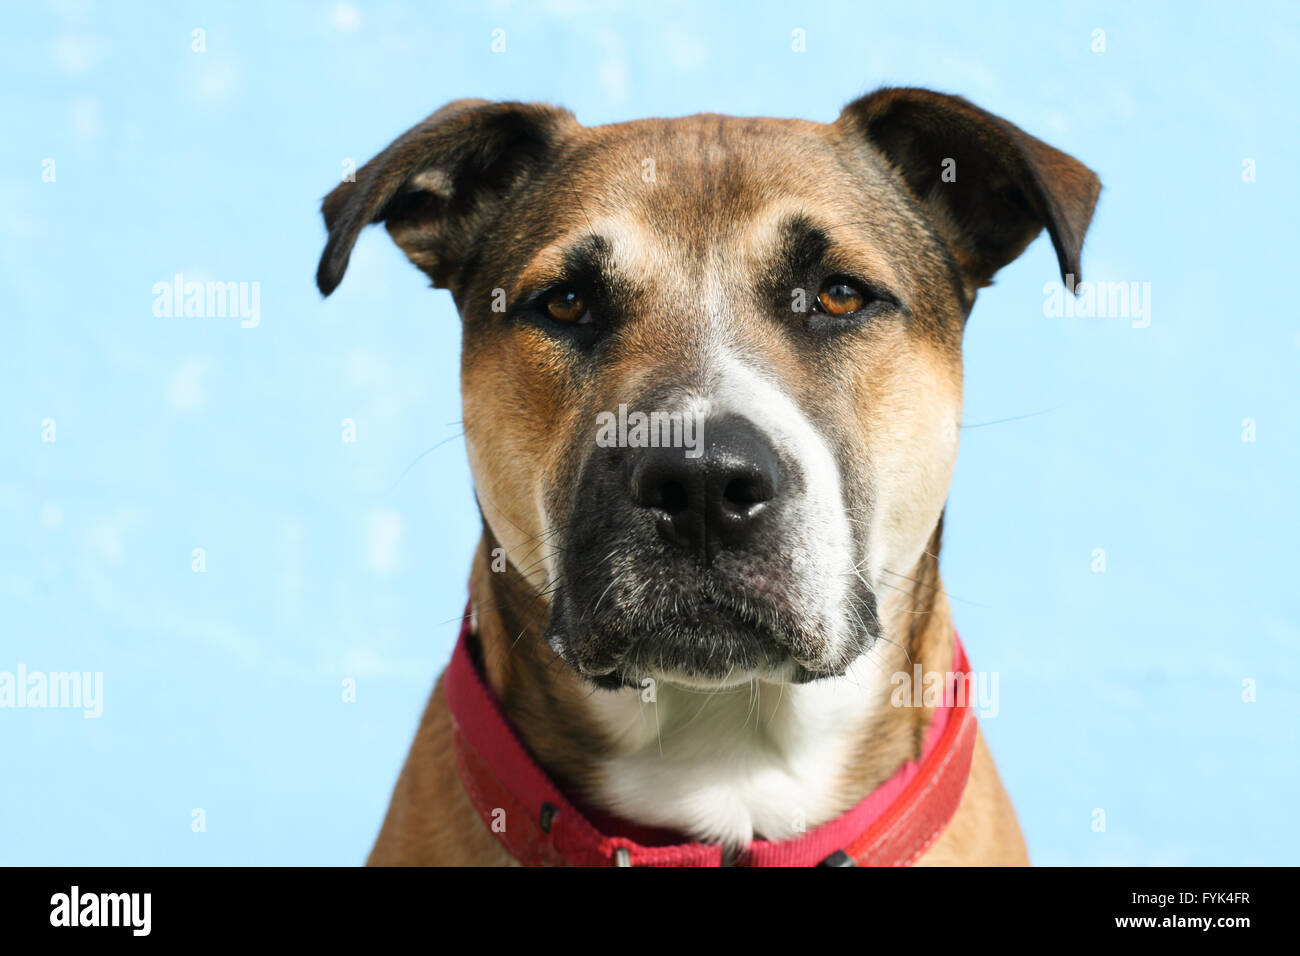 Gran perro joven de raza mixta con orejas, vistiendo un collar rojo mira en línea recta. Él es una casta mezclada posiblemente un pit bull Foto de stock